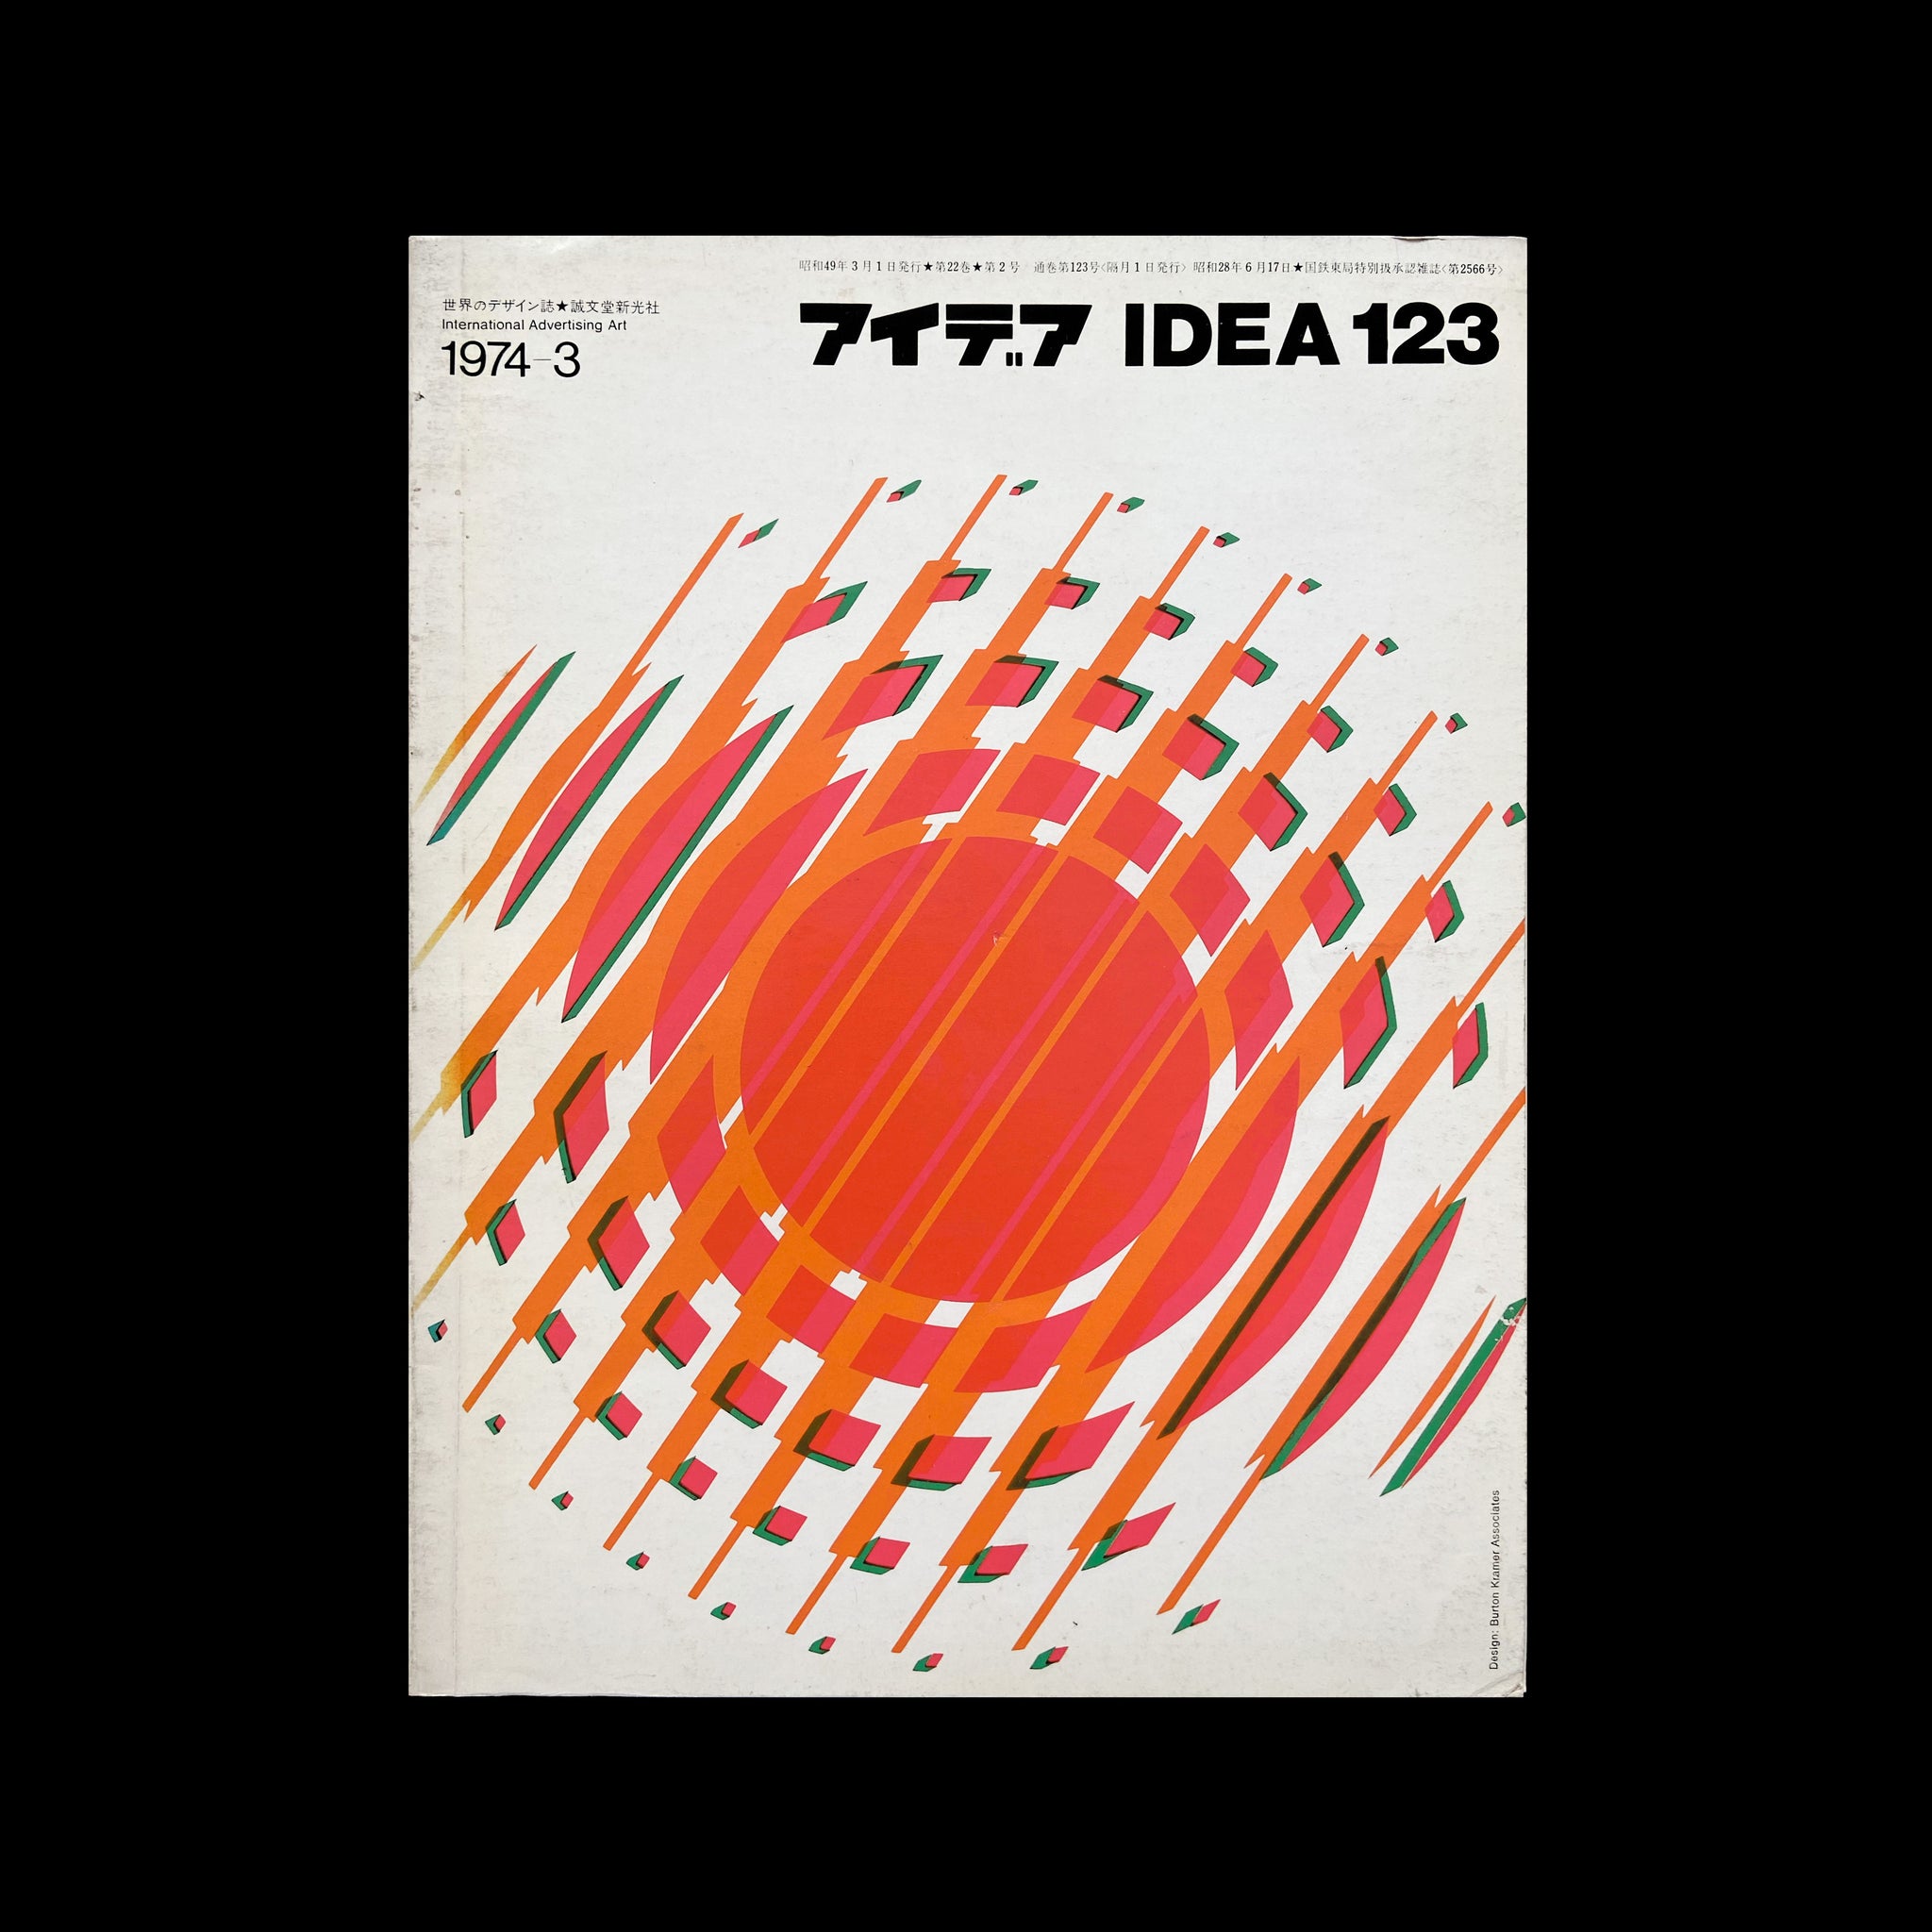 IDEA 123, Burton Kramer, 1974